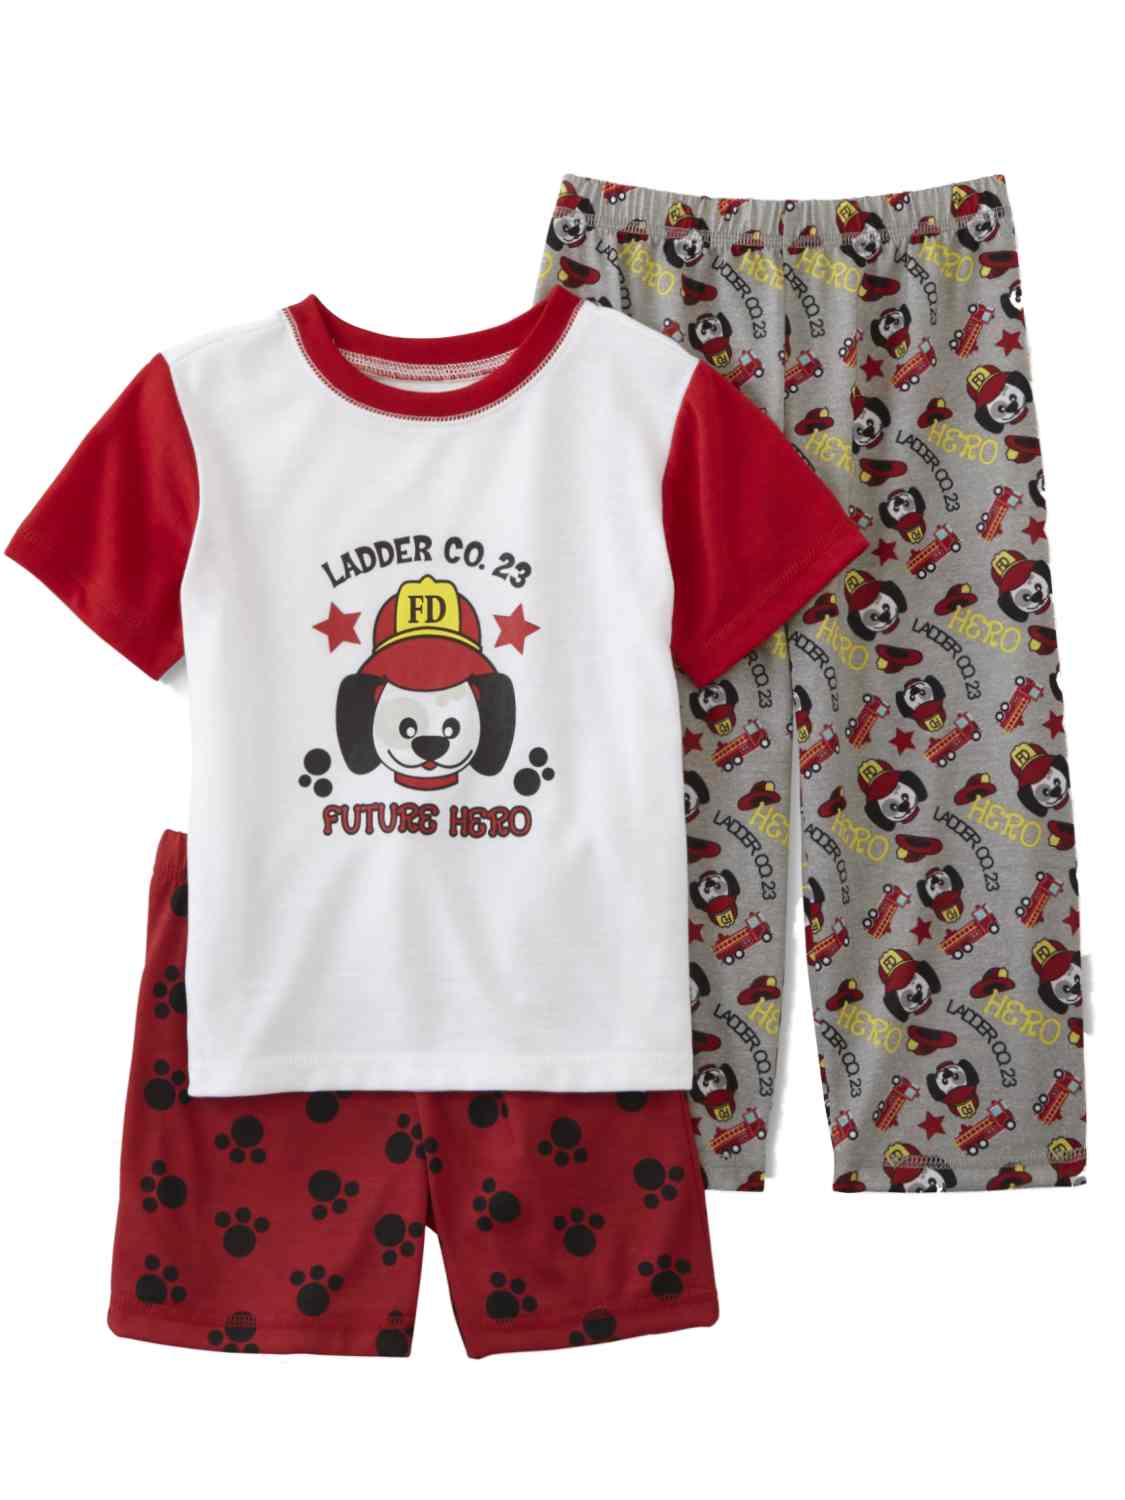 Joe Boxer Toddler Boys Red & Gray Firefighter Dog Pajamas 3 Piece Sleep Set 2T